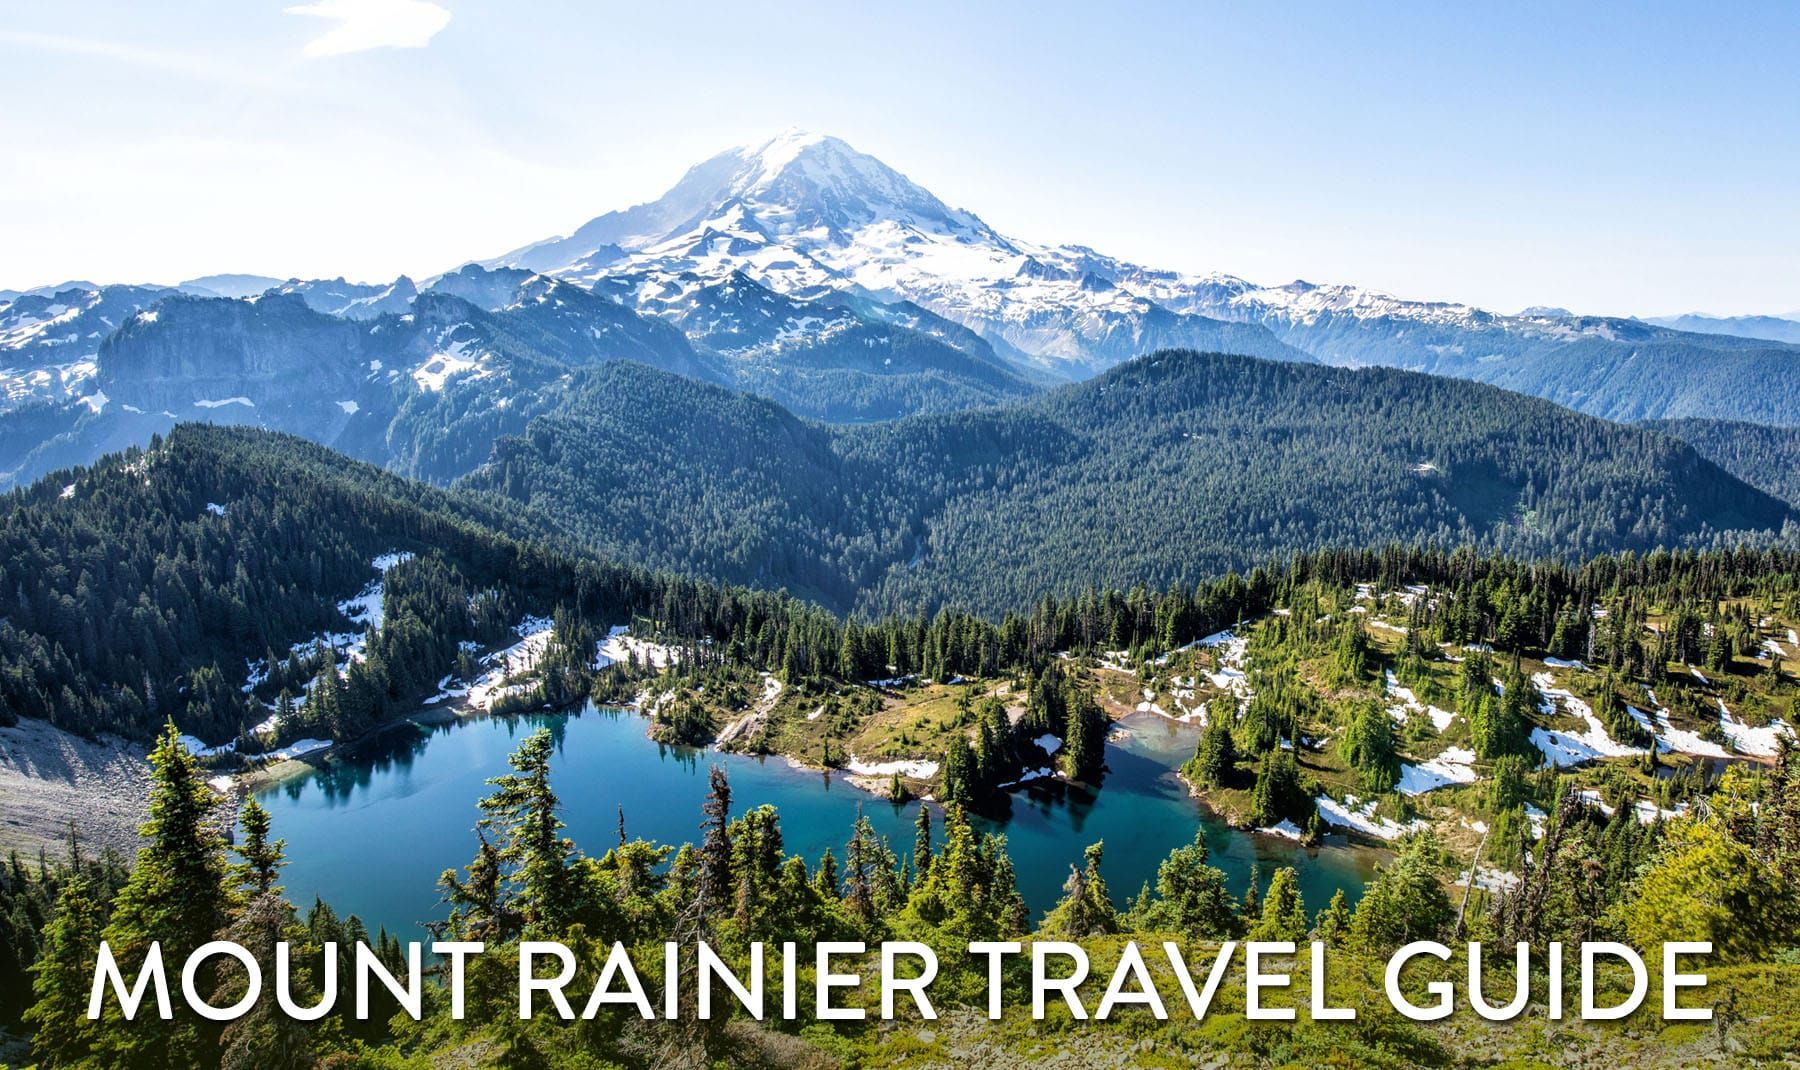 Mount Rainier Travel Guide